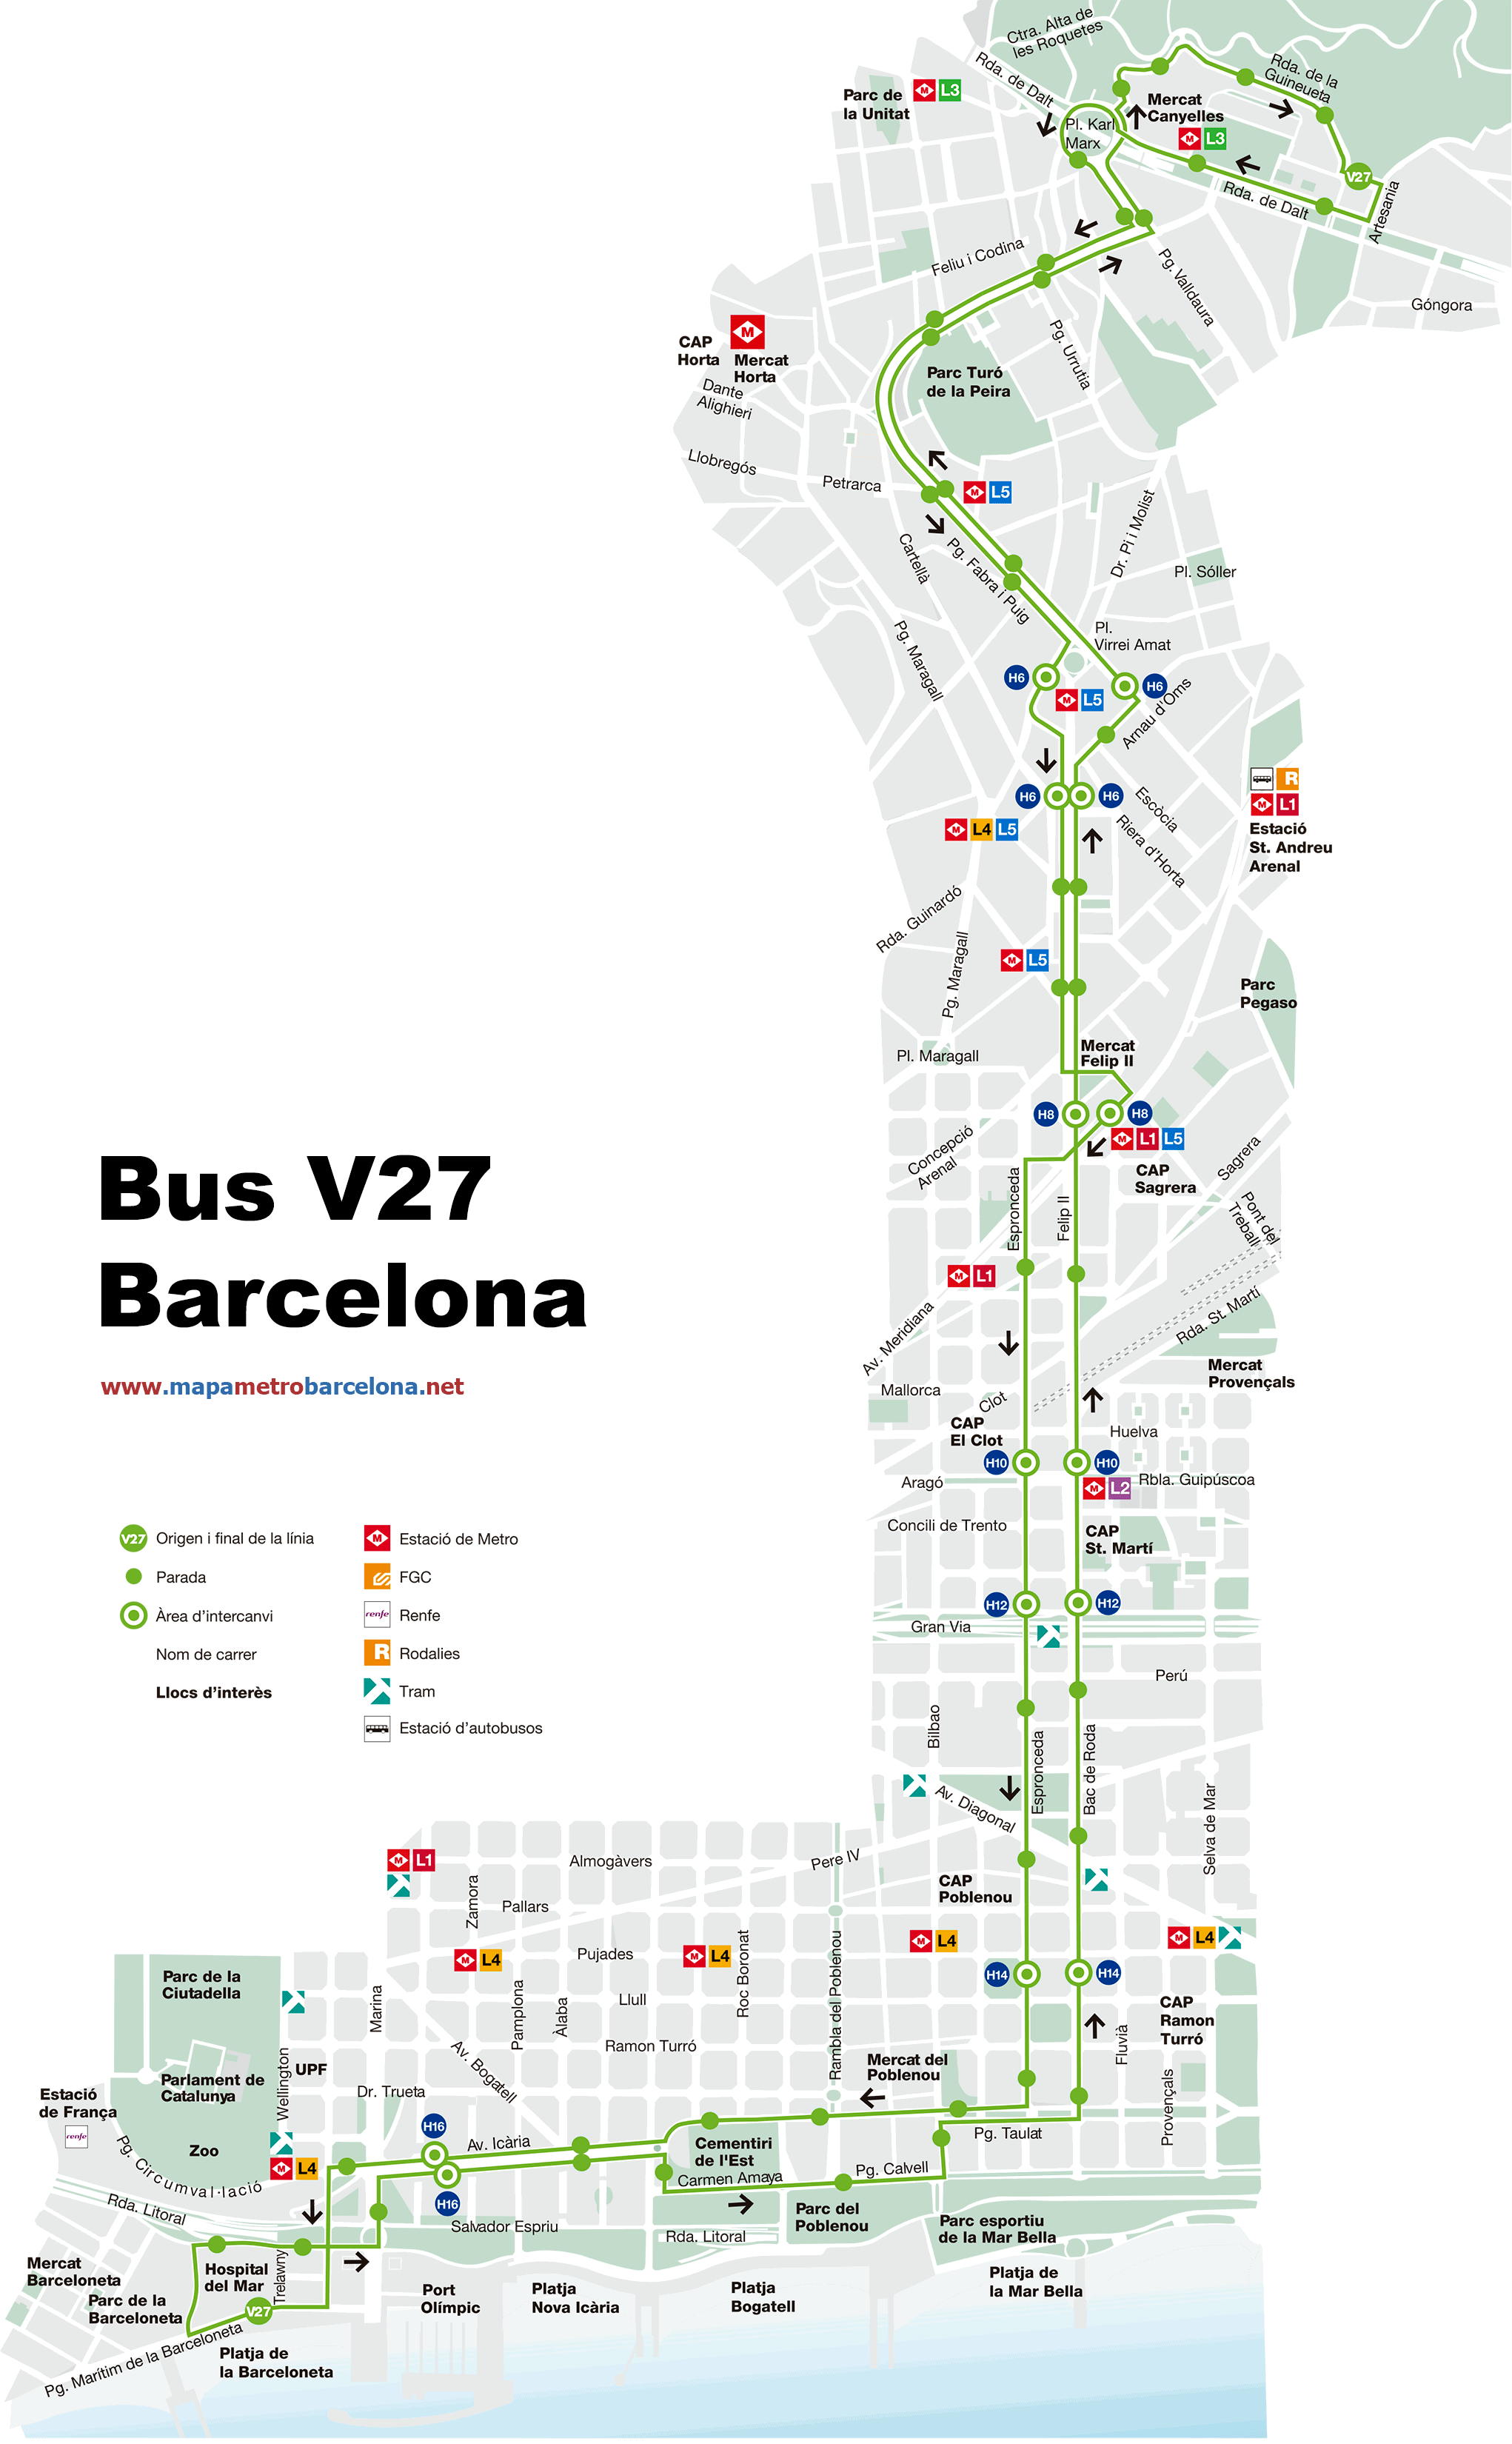 Barcelona bus map line V27